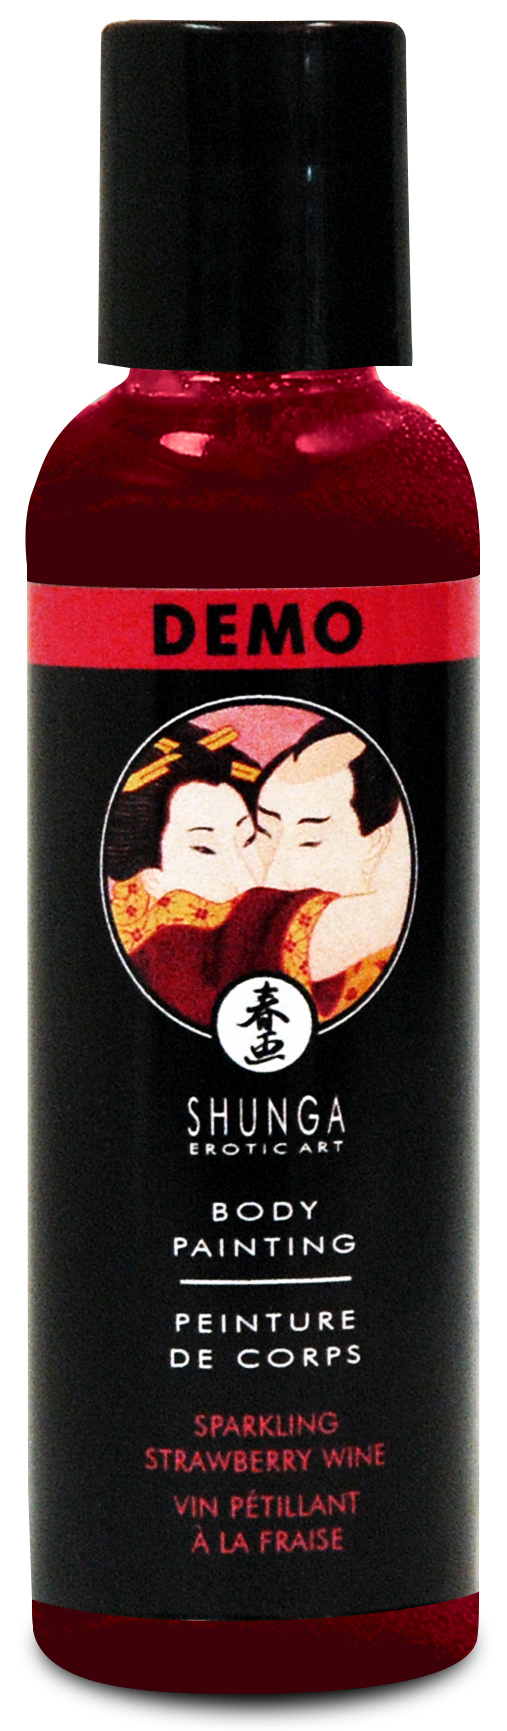 SHUNGA Sparkl. Strawberry Wine Body Painting 60ml TESTER